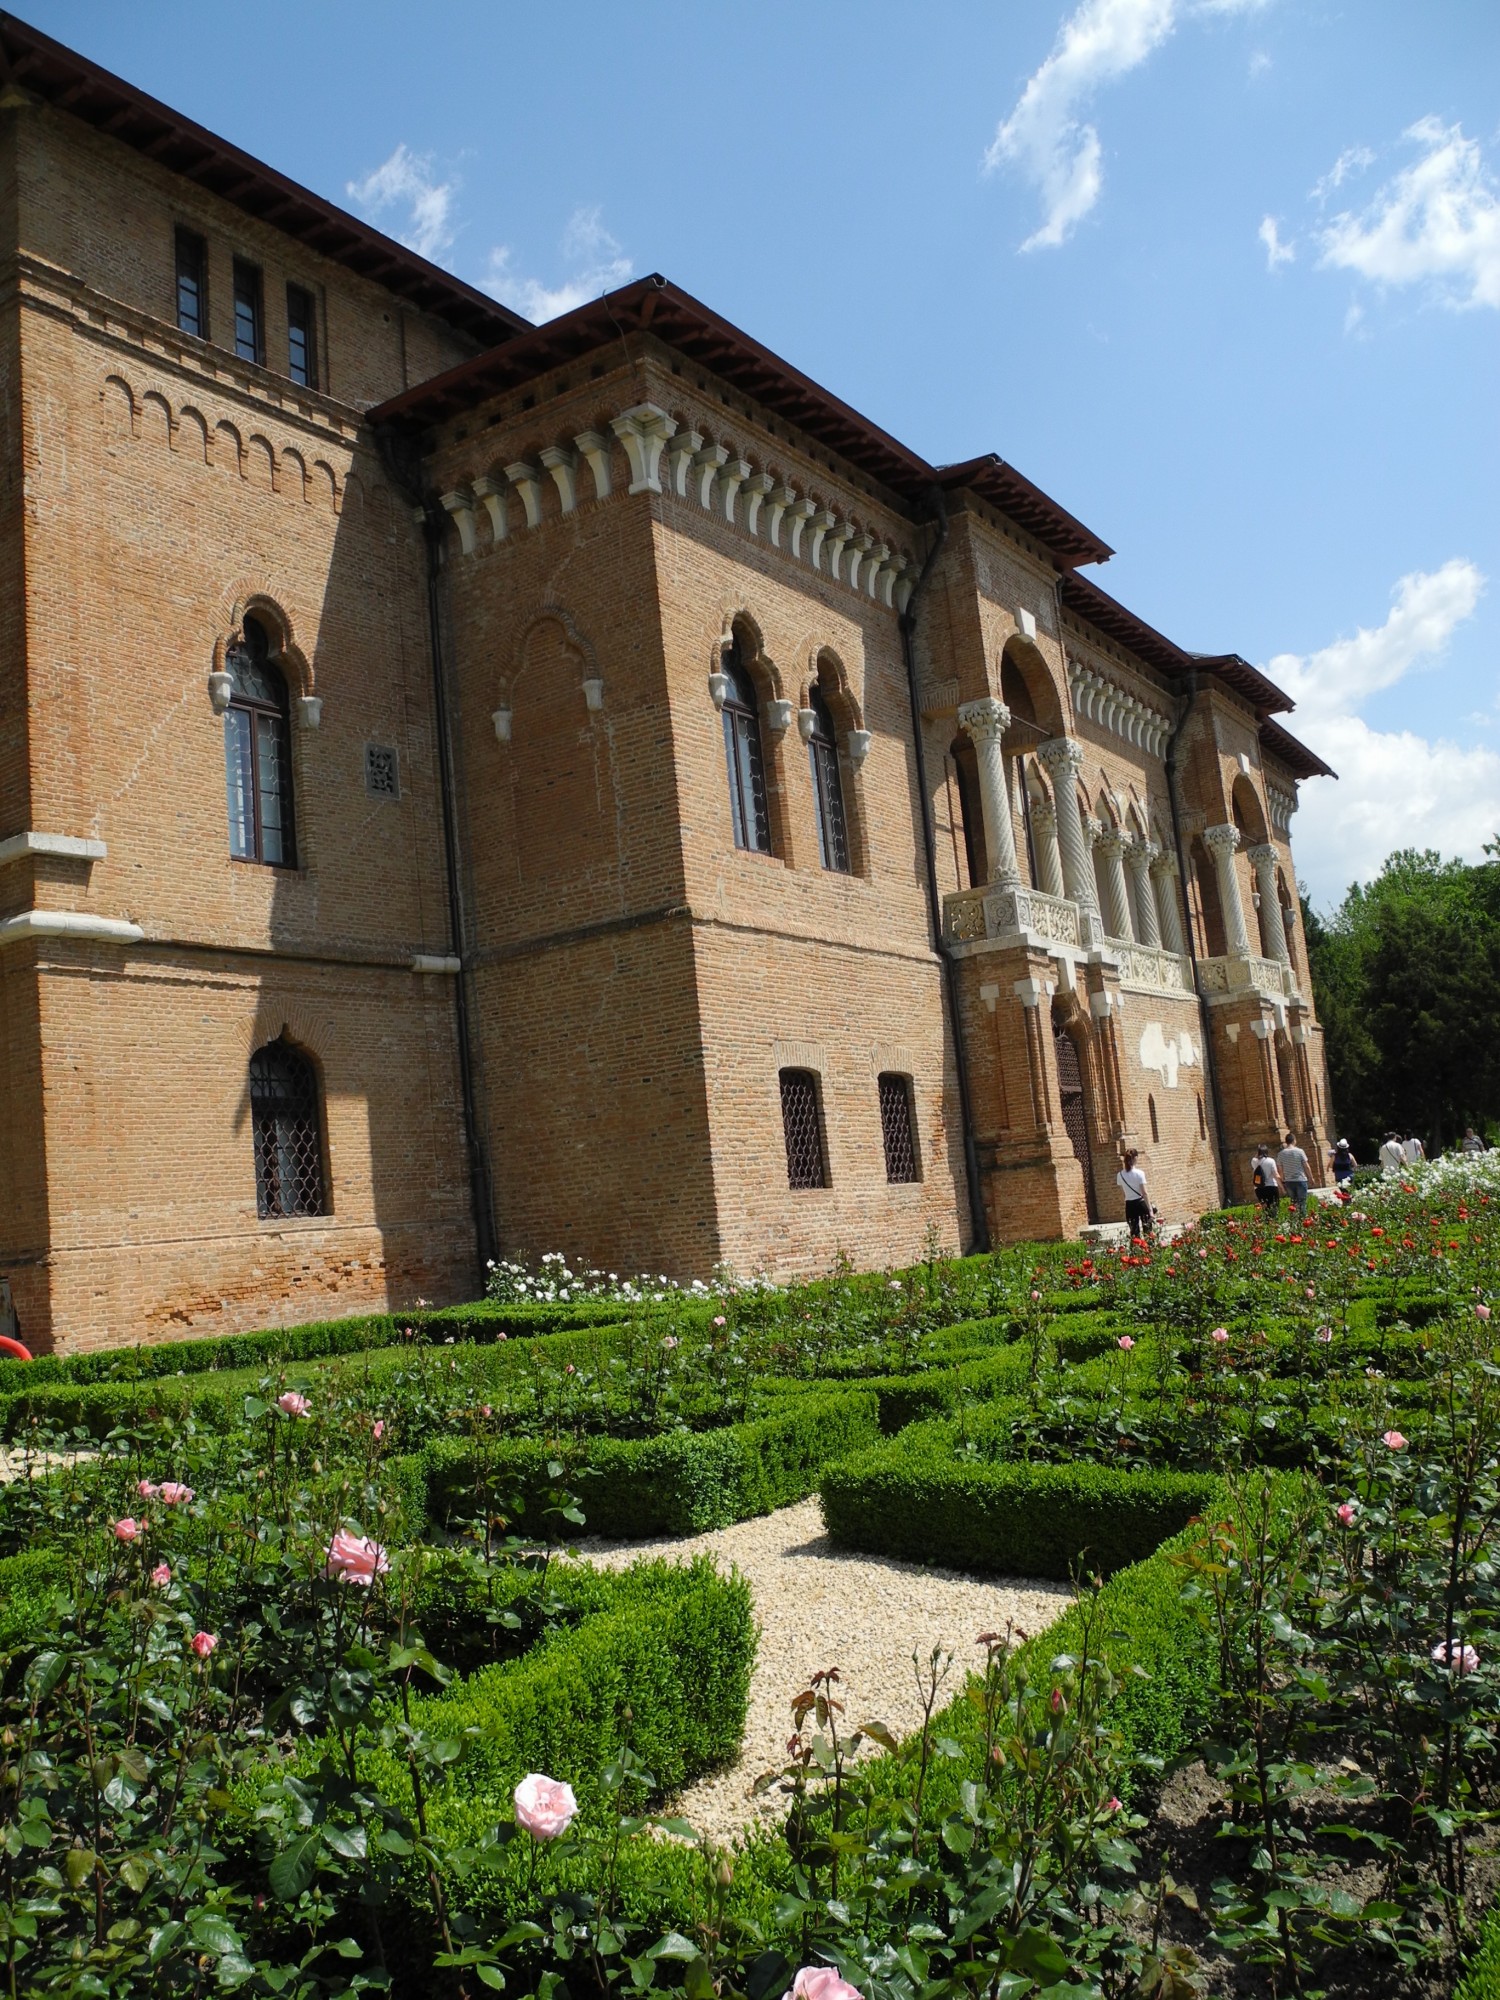 Mogosoaia Palace and gardens